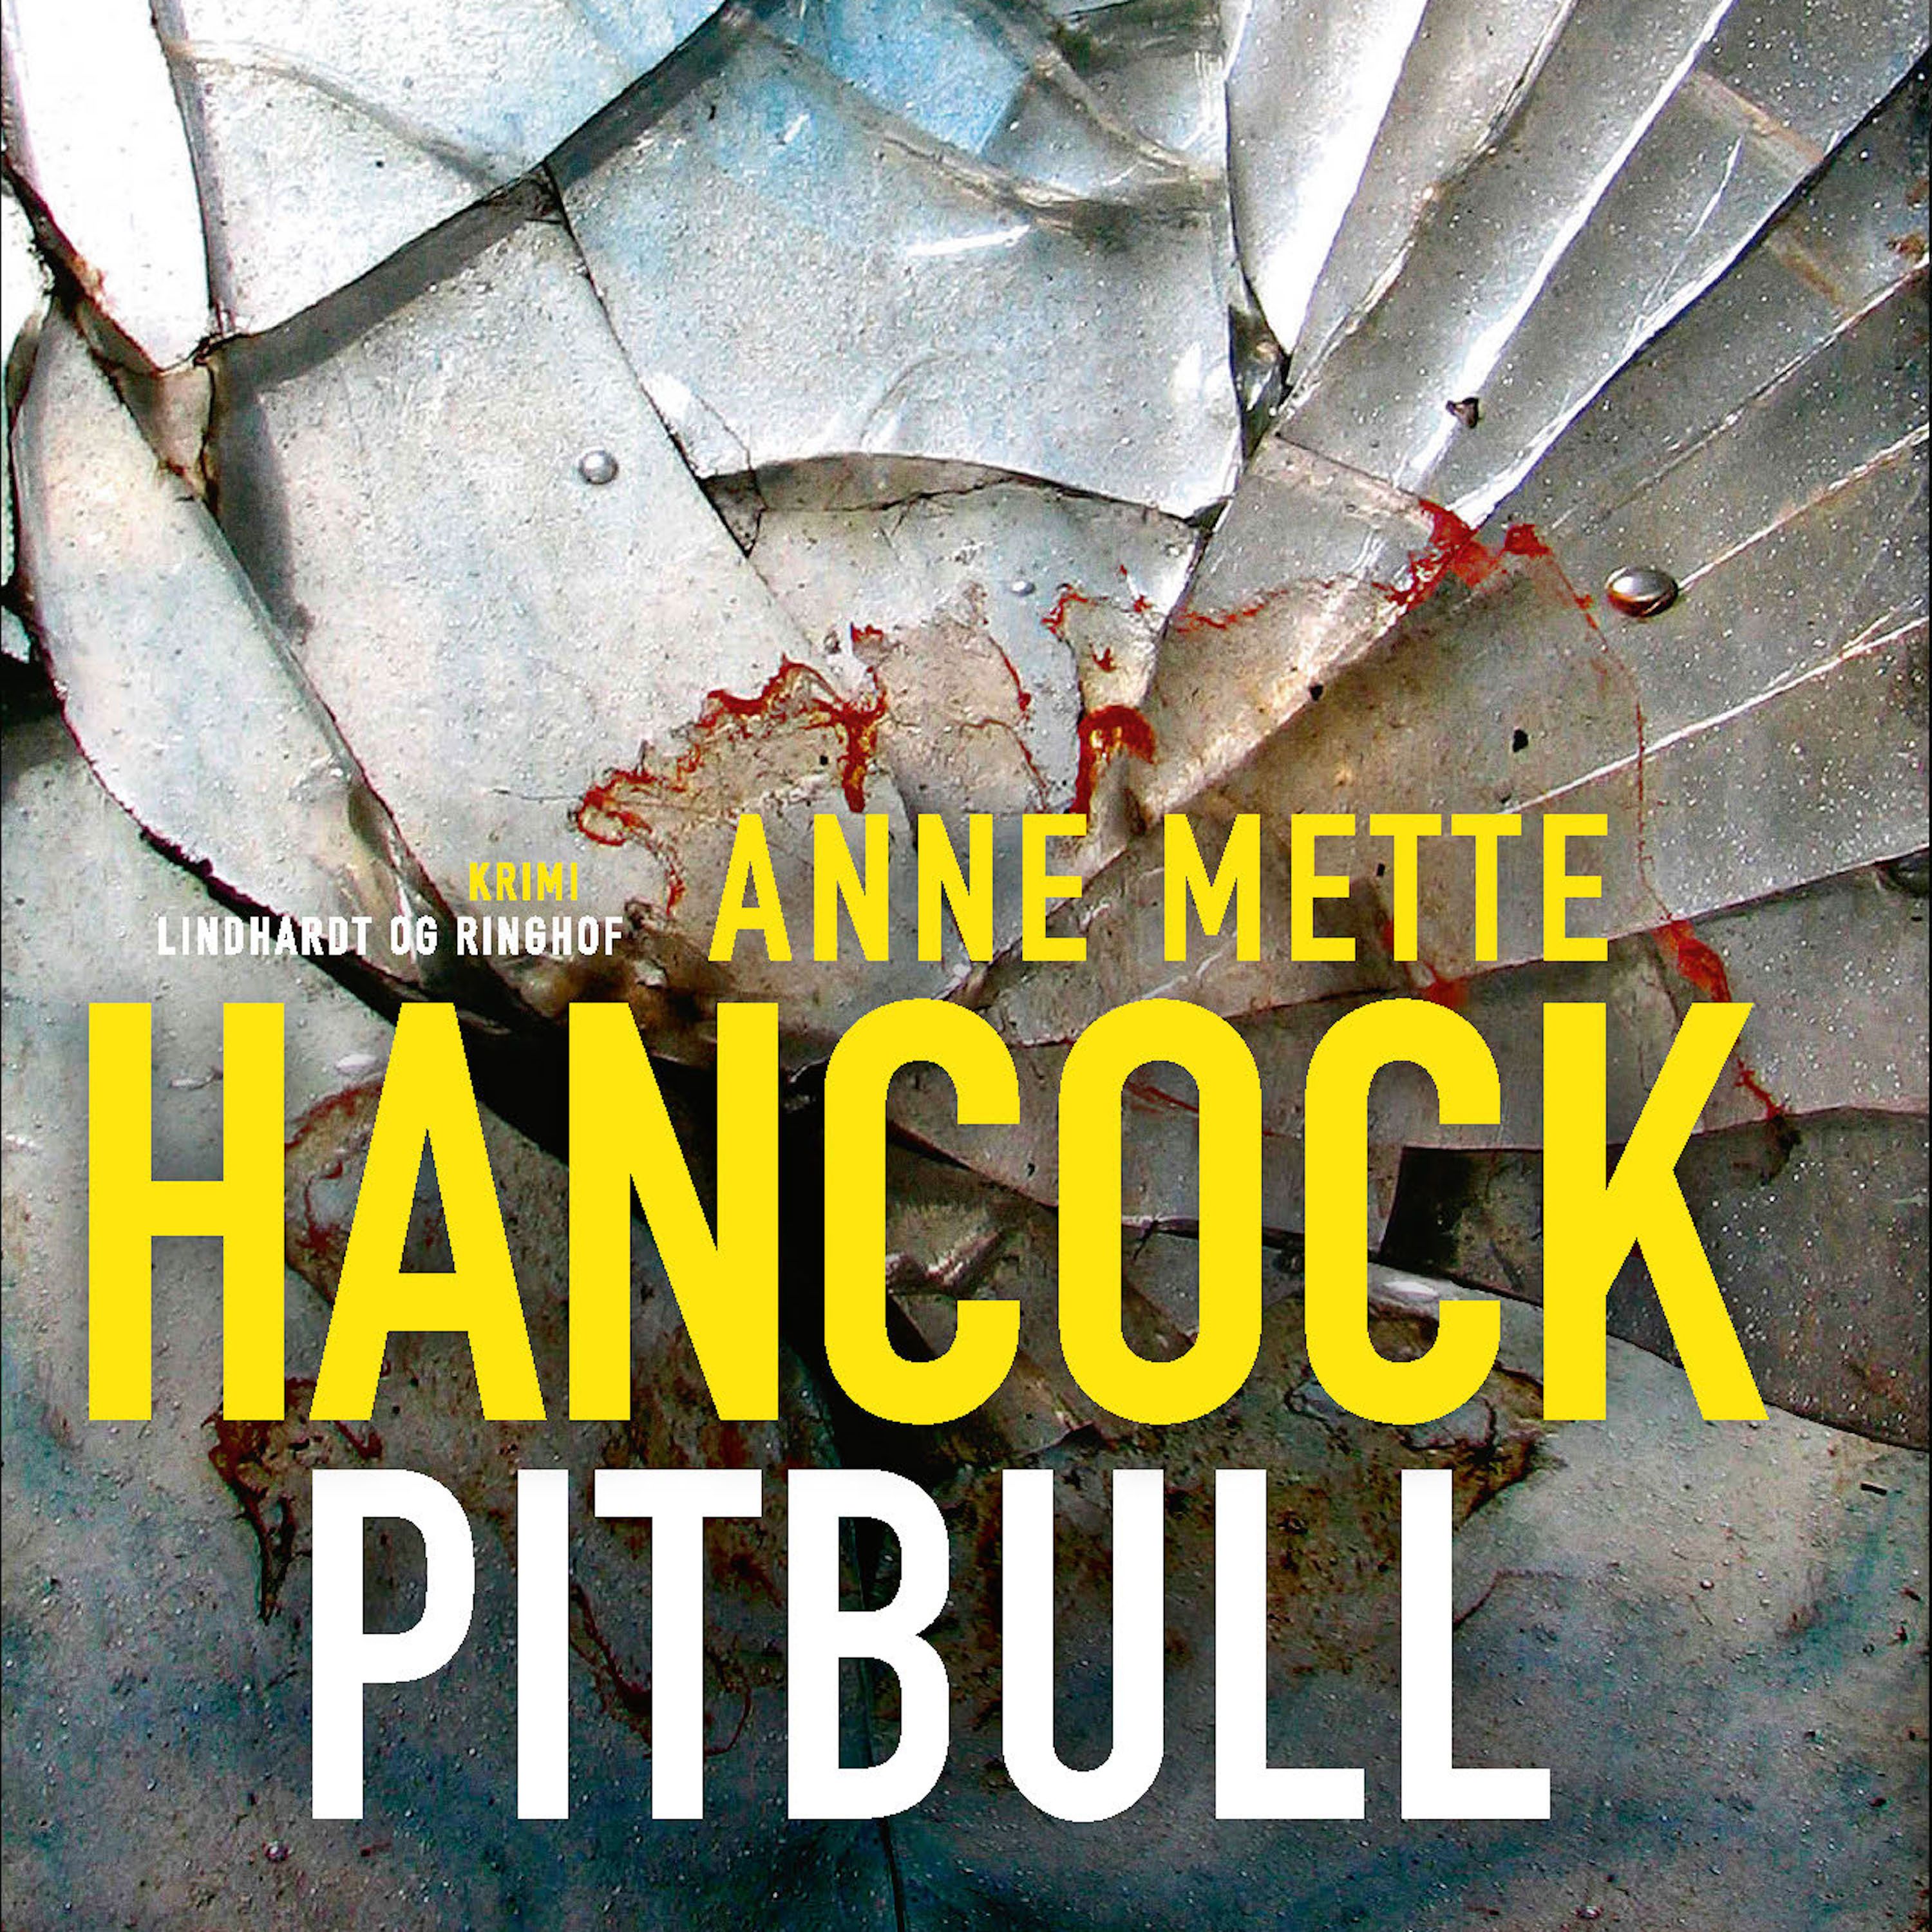 Pitbull, audiobook by Anne Mette Hancock